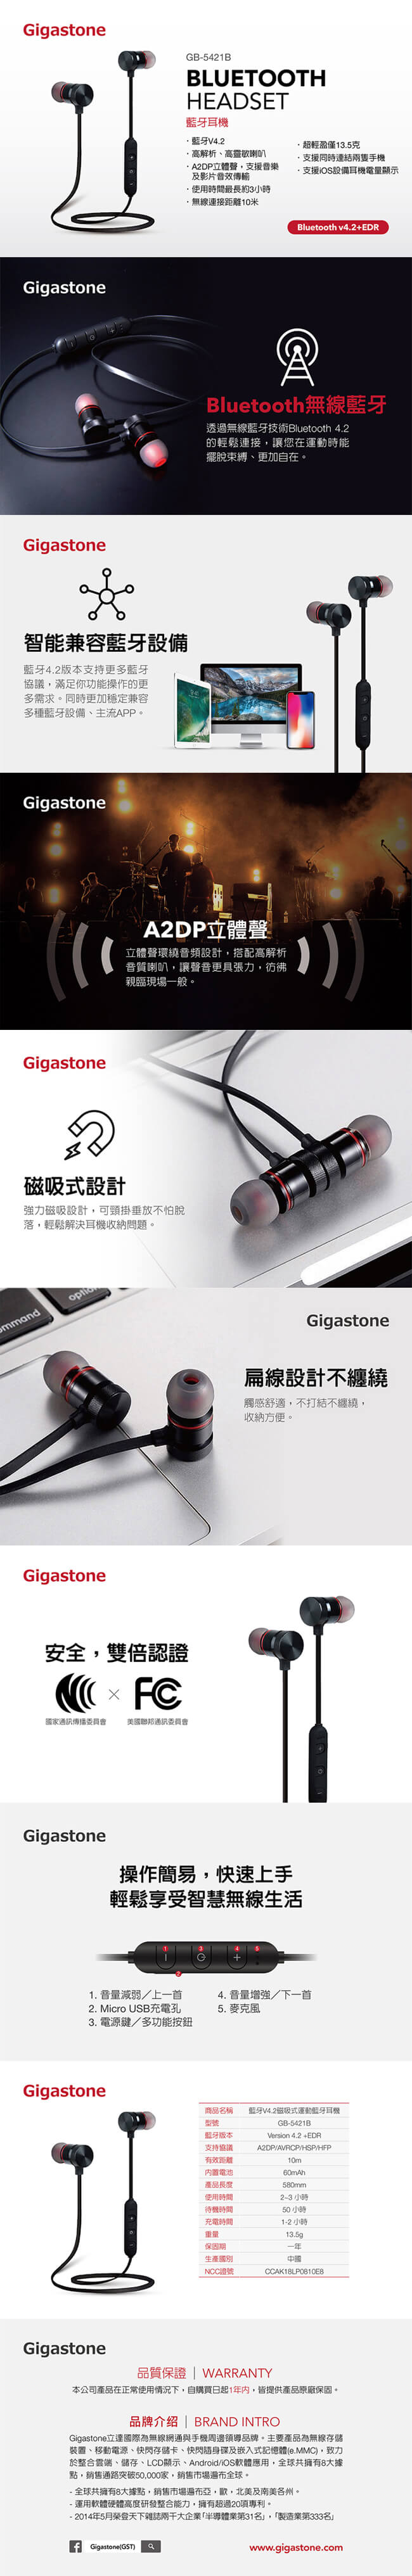 Gigastone GB-5421B 磁吸式運動藍牙耳機